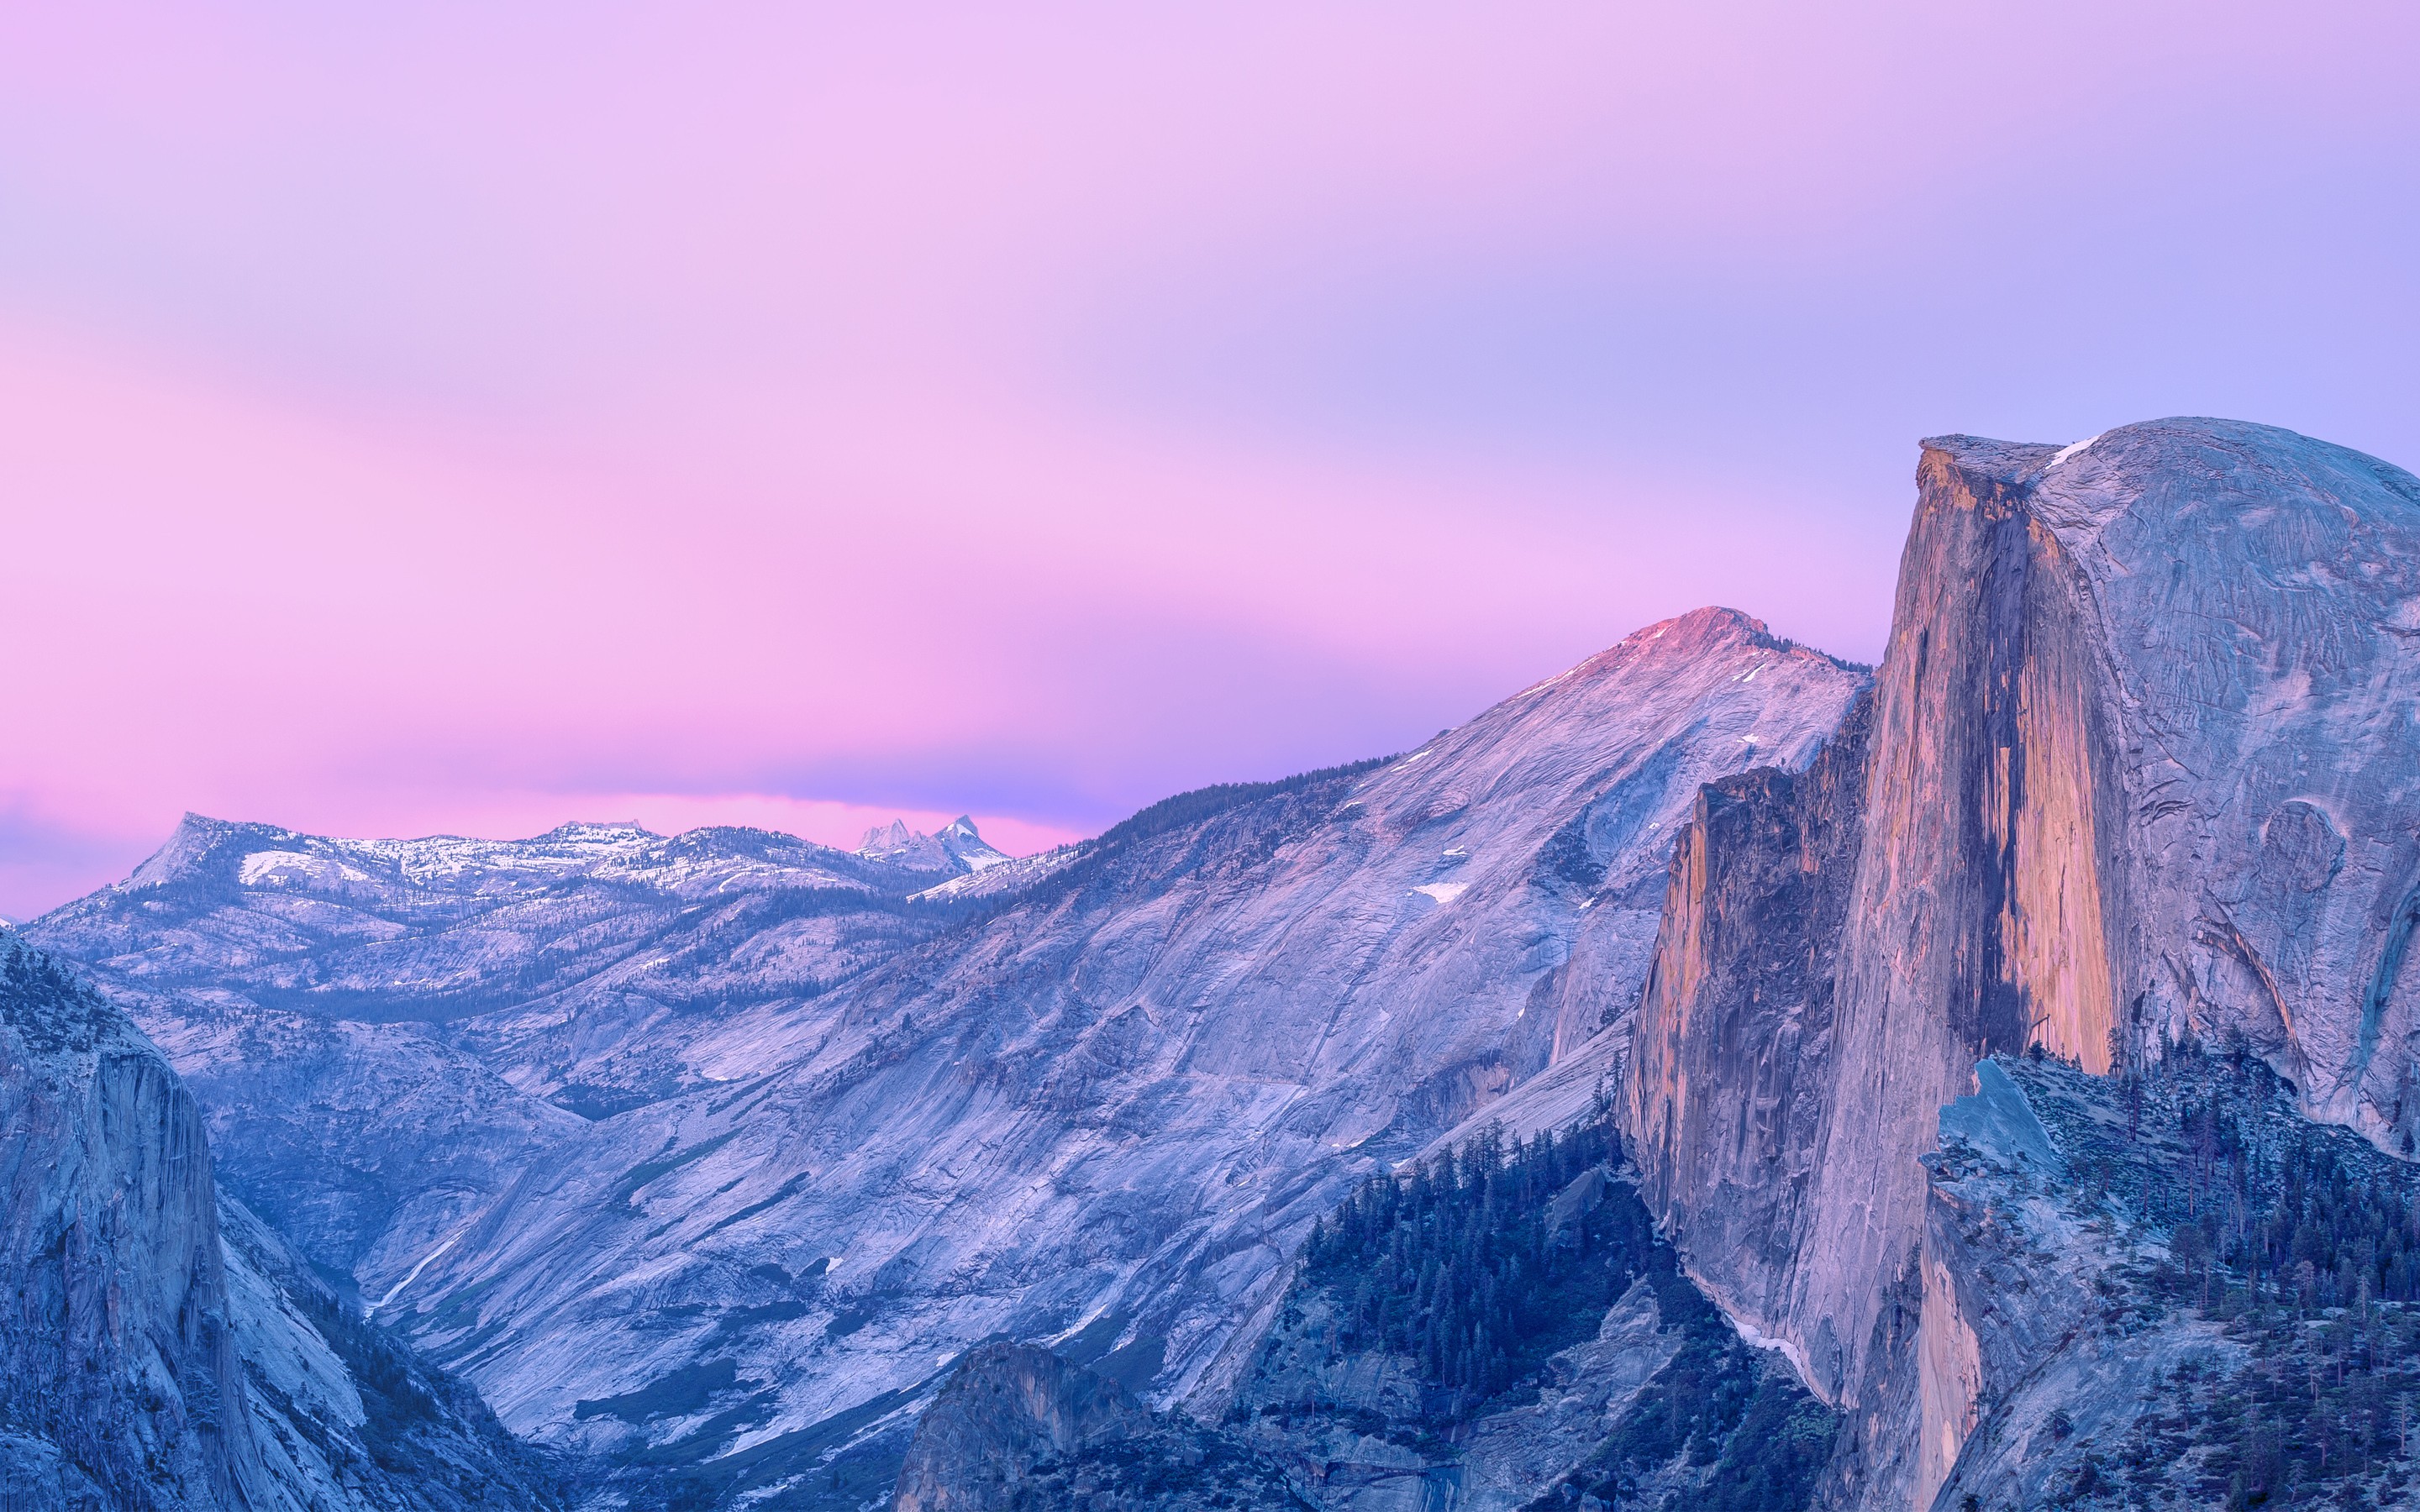 Yosemite National Park Wallpaper For Desktop And Mobiles 15 Retina Macbook Pro Hd Wallpaper Wallpapers Net